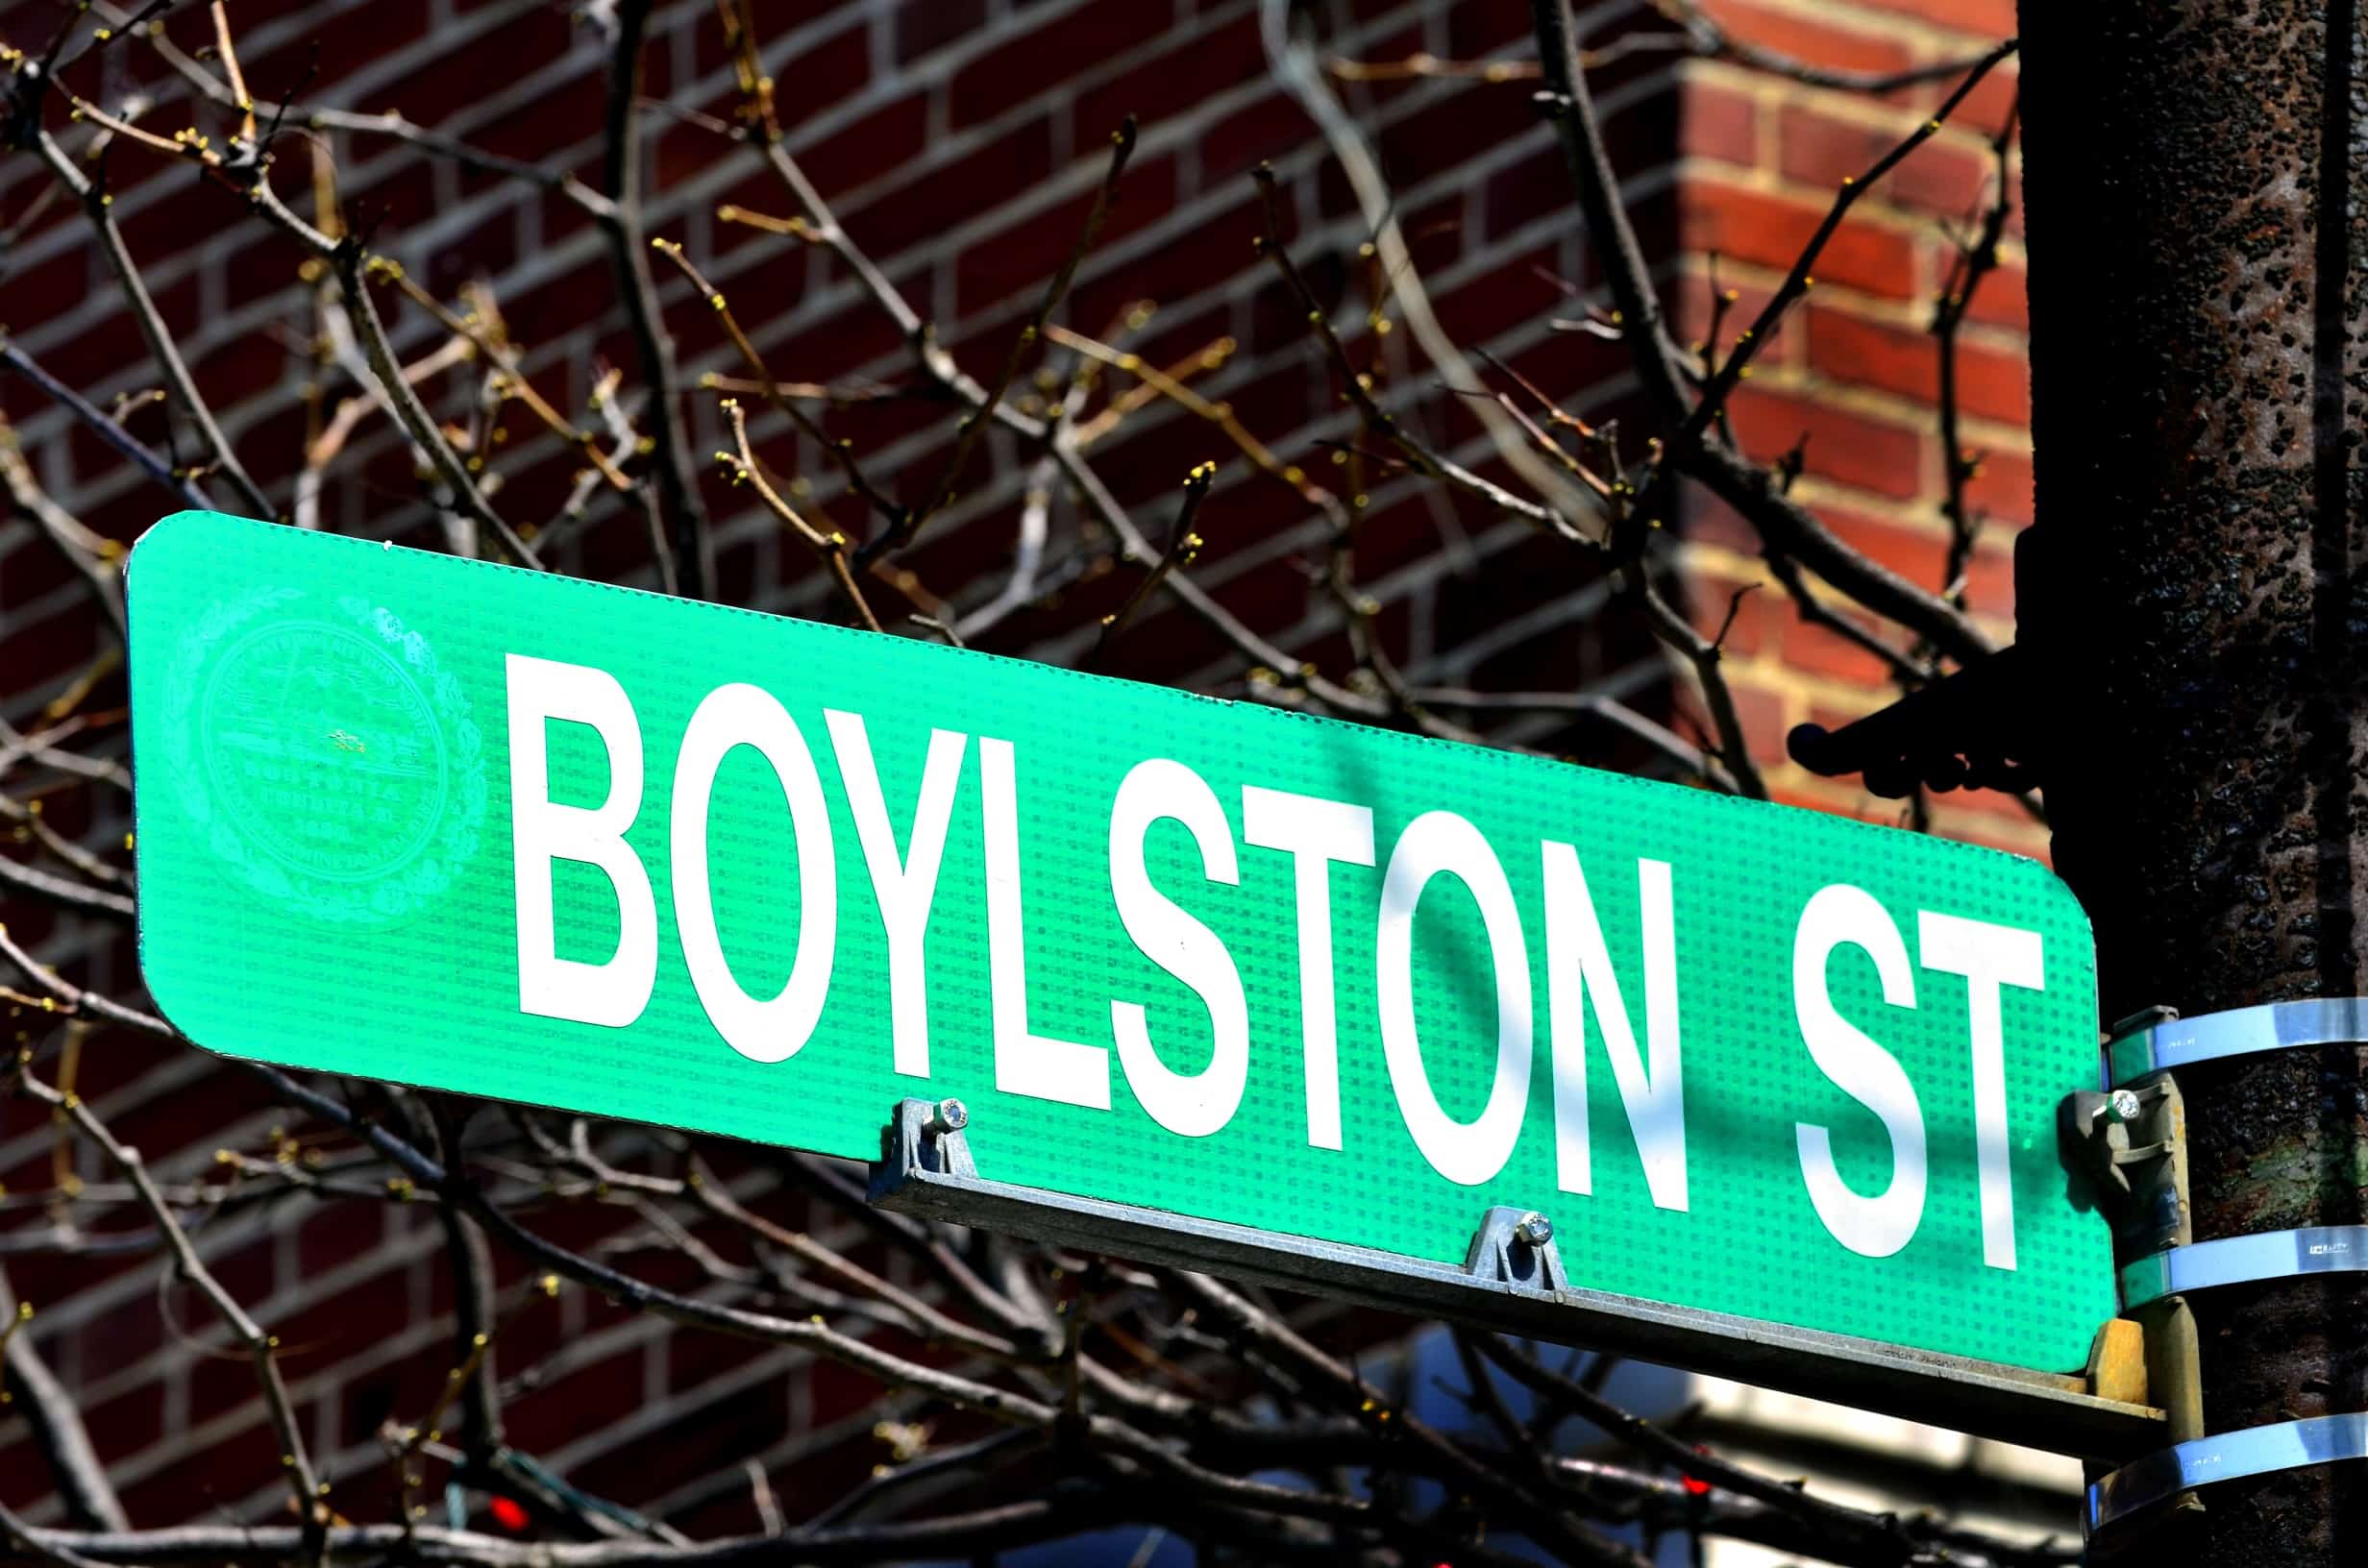 Boylston Street Sign site of 2013 Boston Bombings